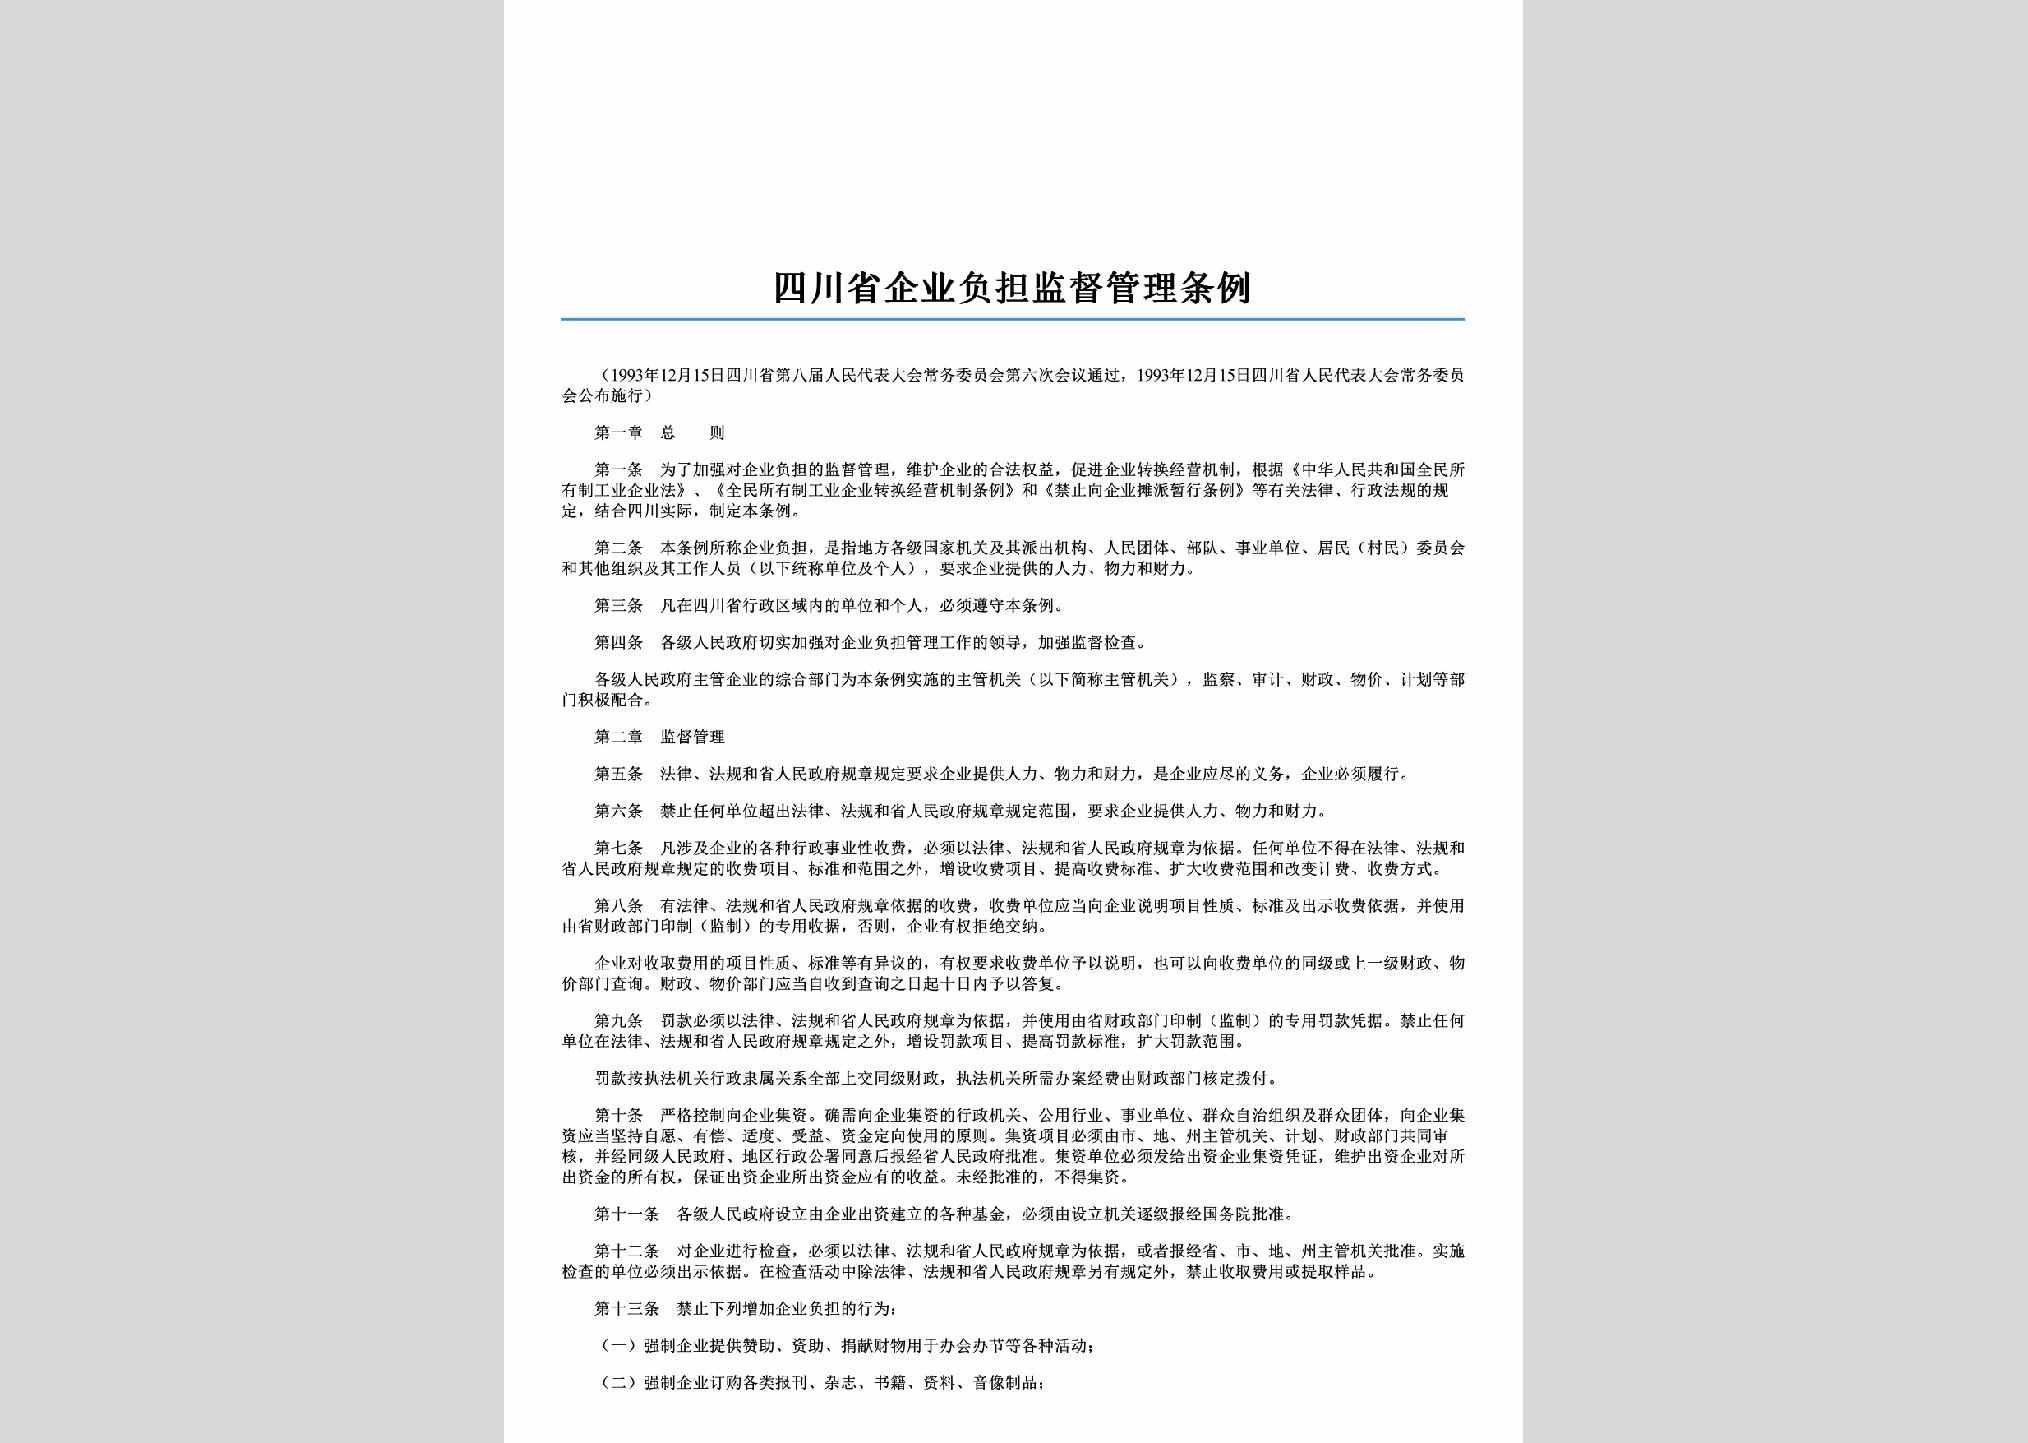 SC-QYFDJDGL-2006：四川省企业负担监督管理条例